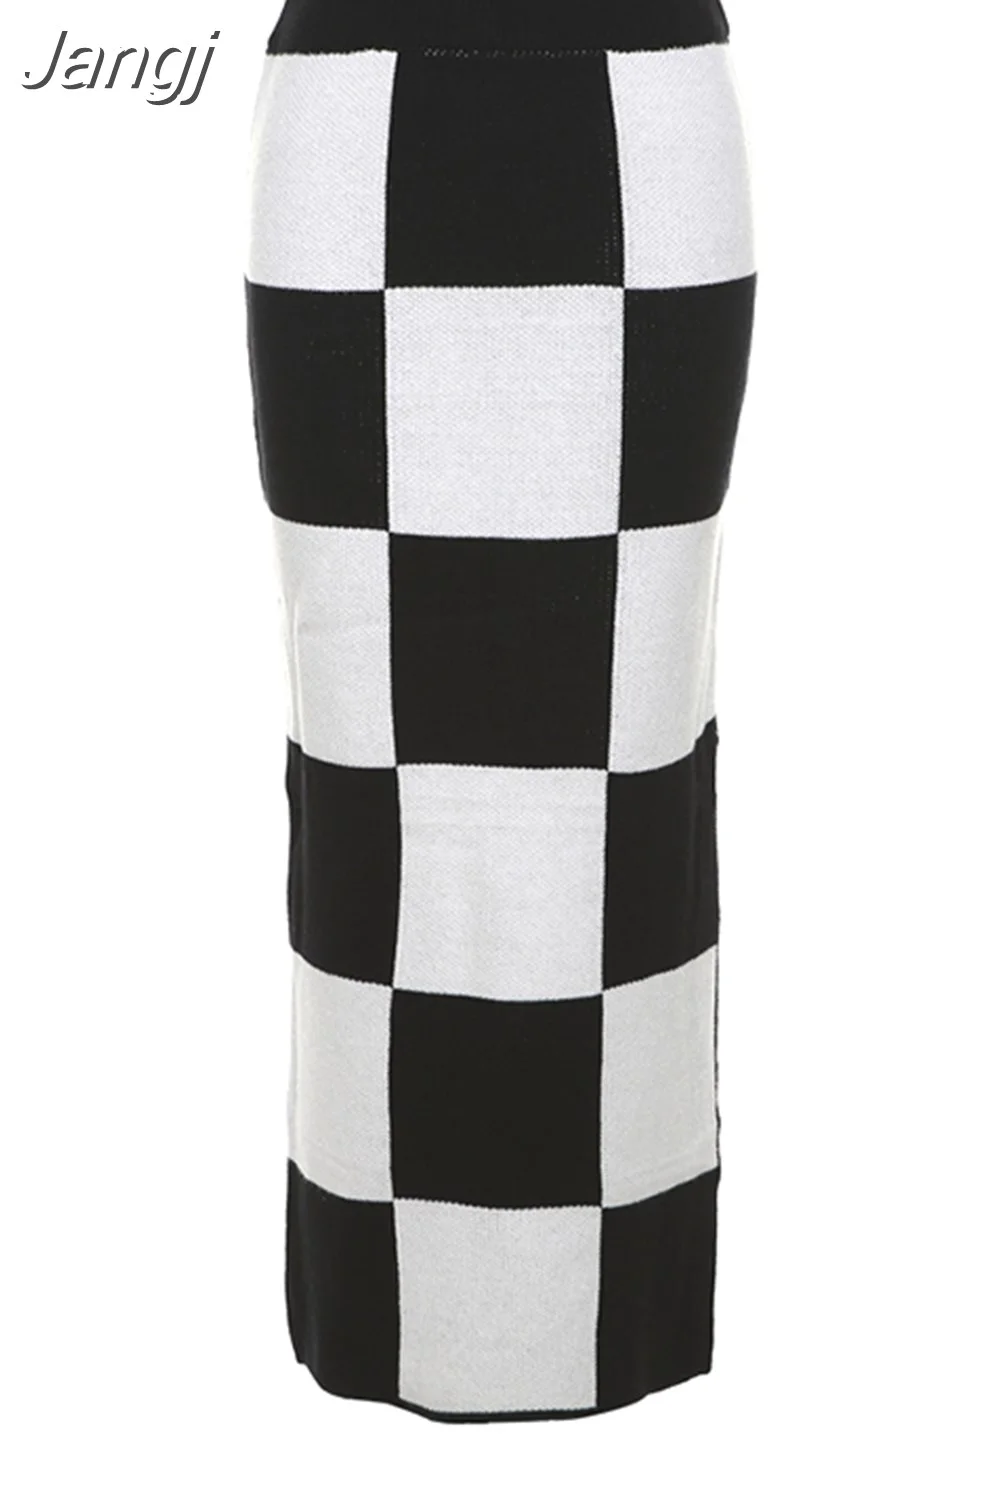 Jangj Knit Elegant Black White Checkerboard Skirt Women Casual High Waist Skinny Panelled Lady Bottoms Female Streetwear